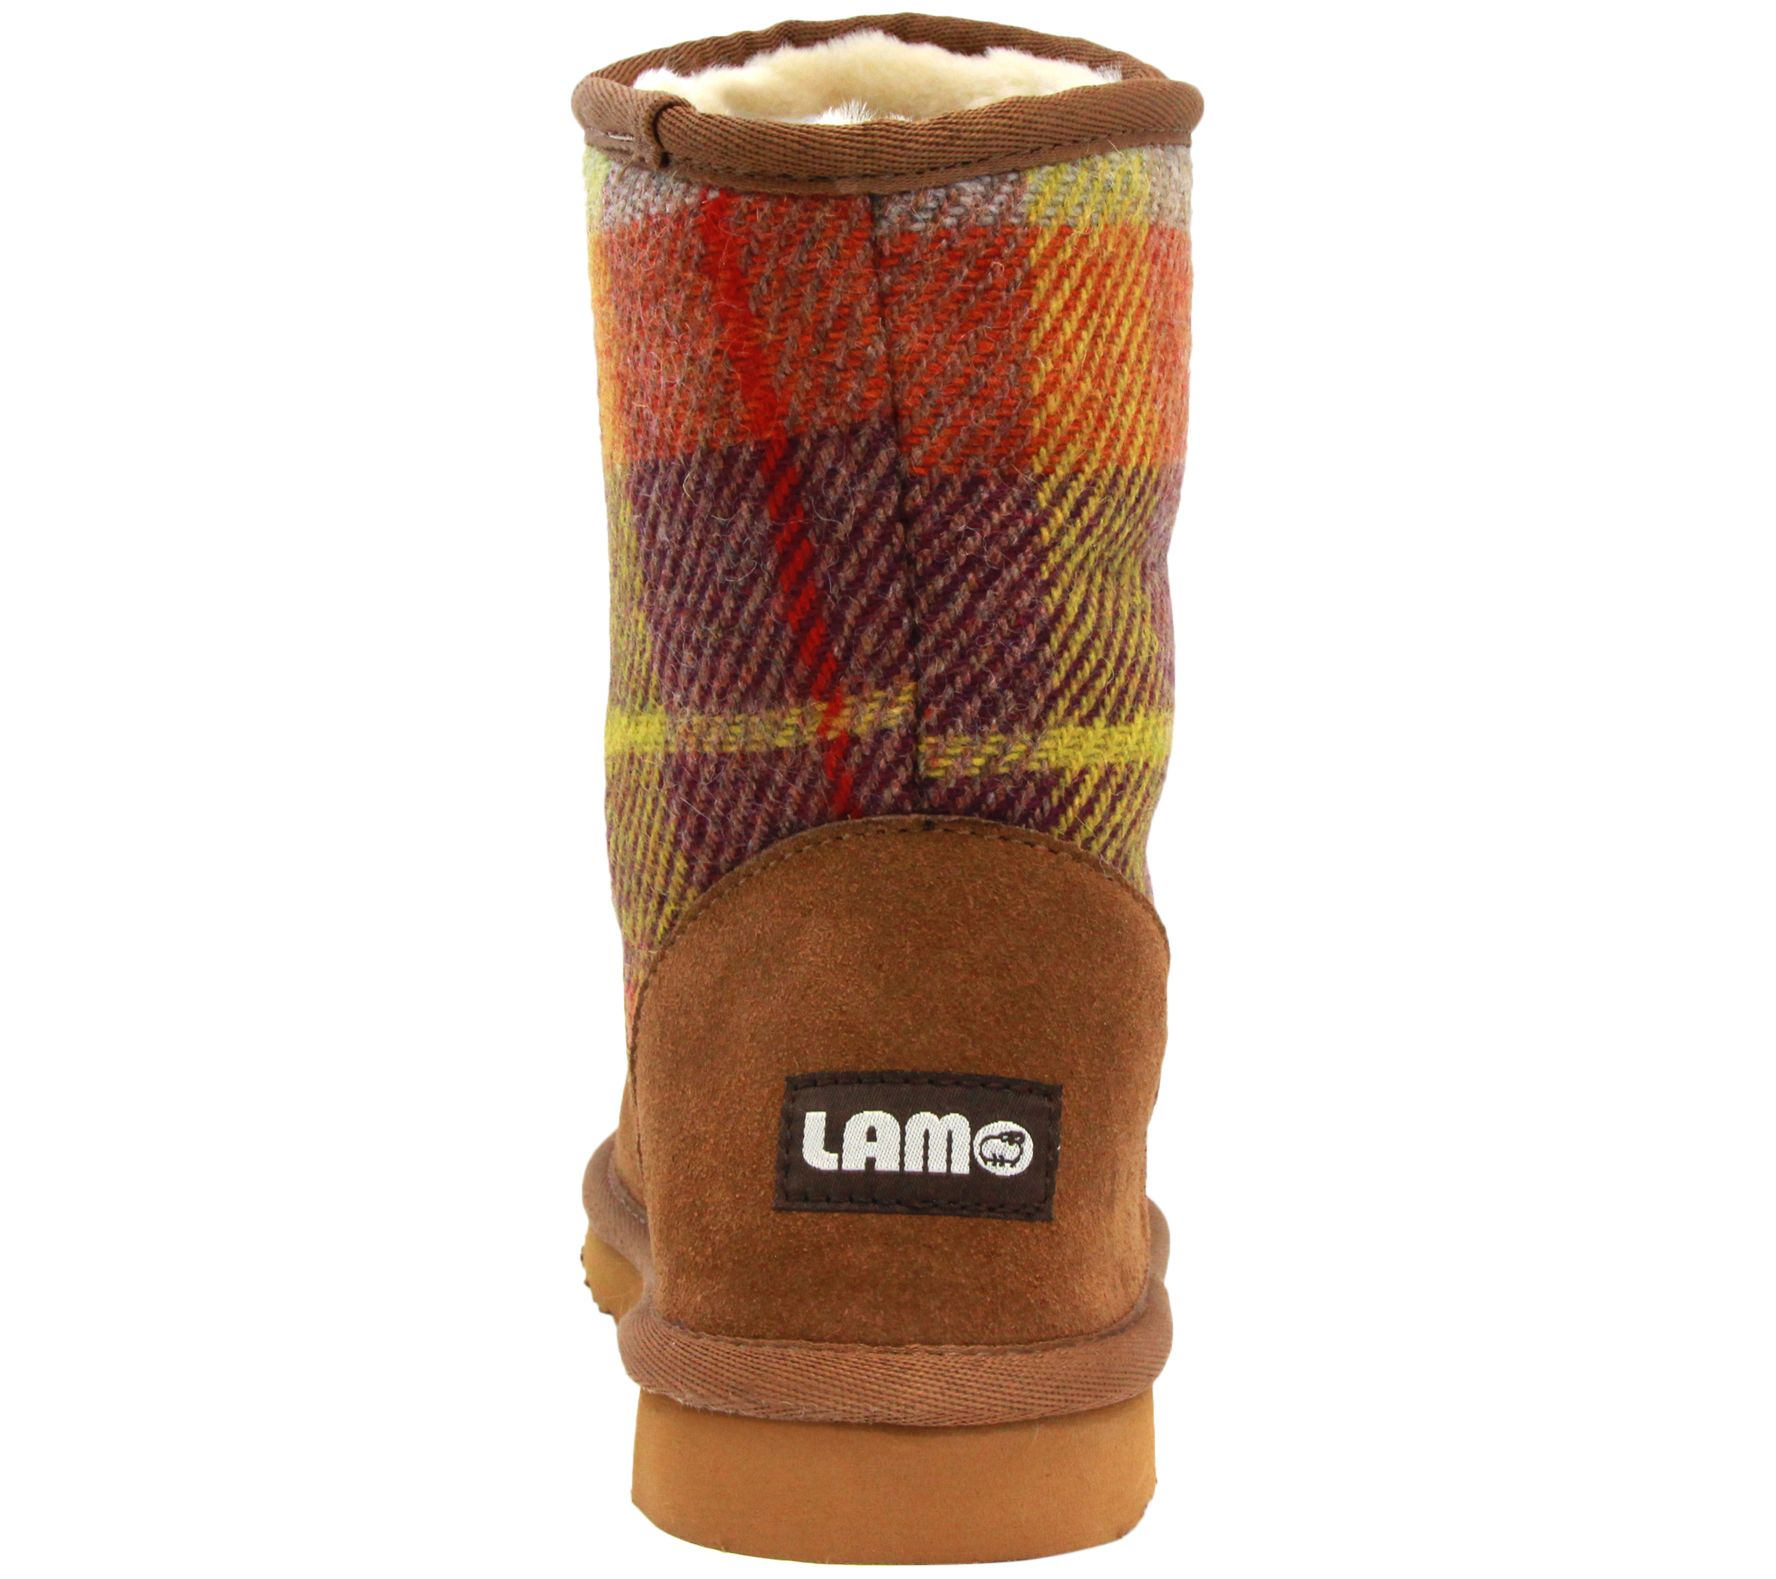 Lamo Suede and Textile Boots - Wembley - QVC.com